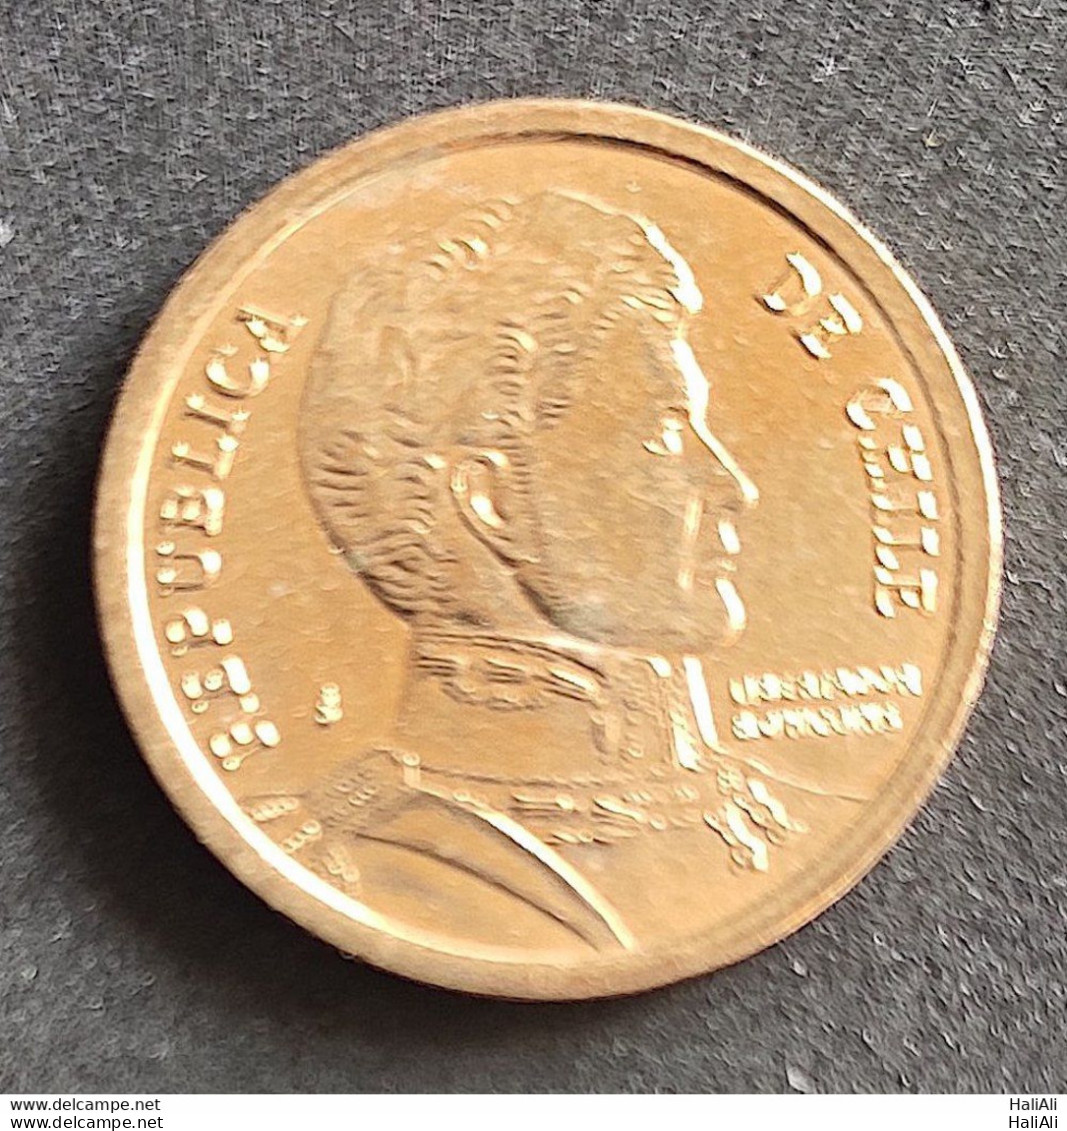 Coin Chile Coin 2012 10 Pesos 1 - Chile